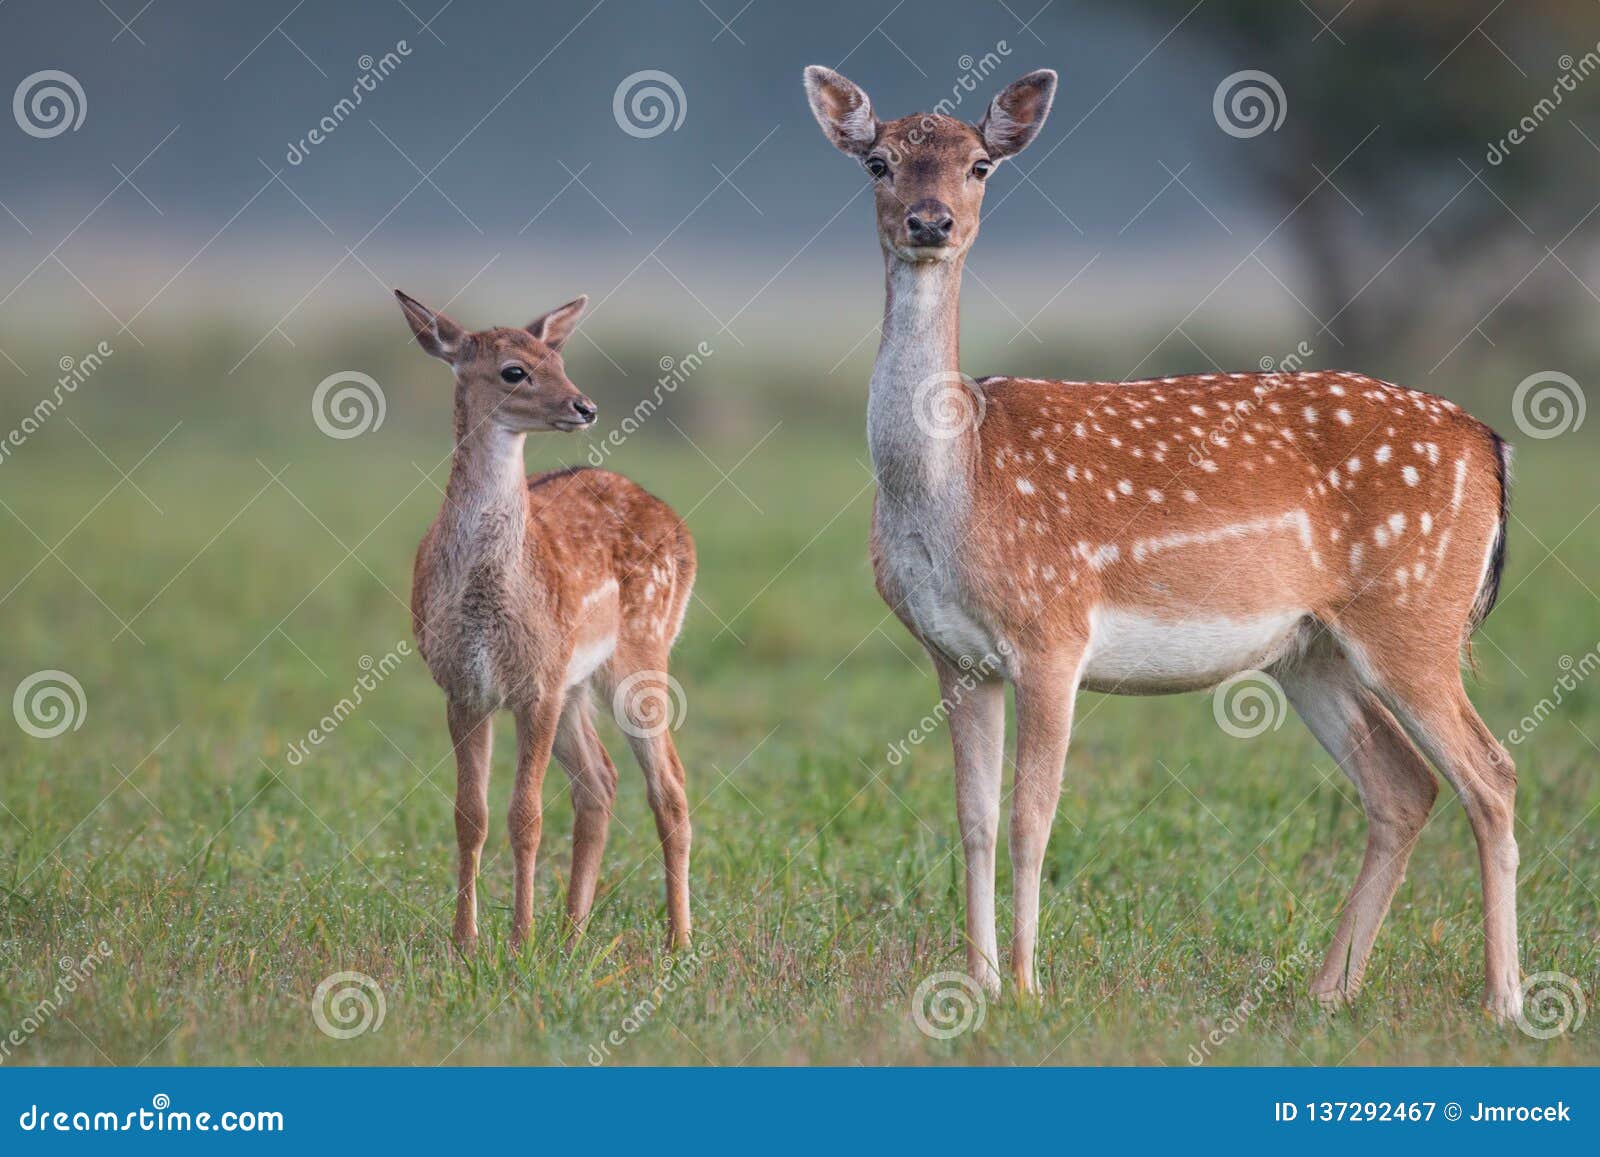 doe and fawn fallow deer, dama dama, in autumn colors